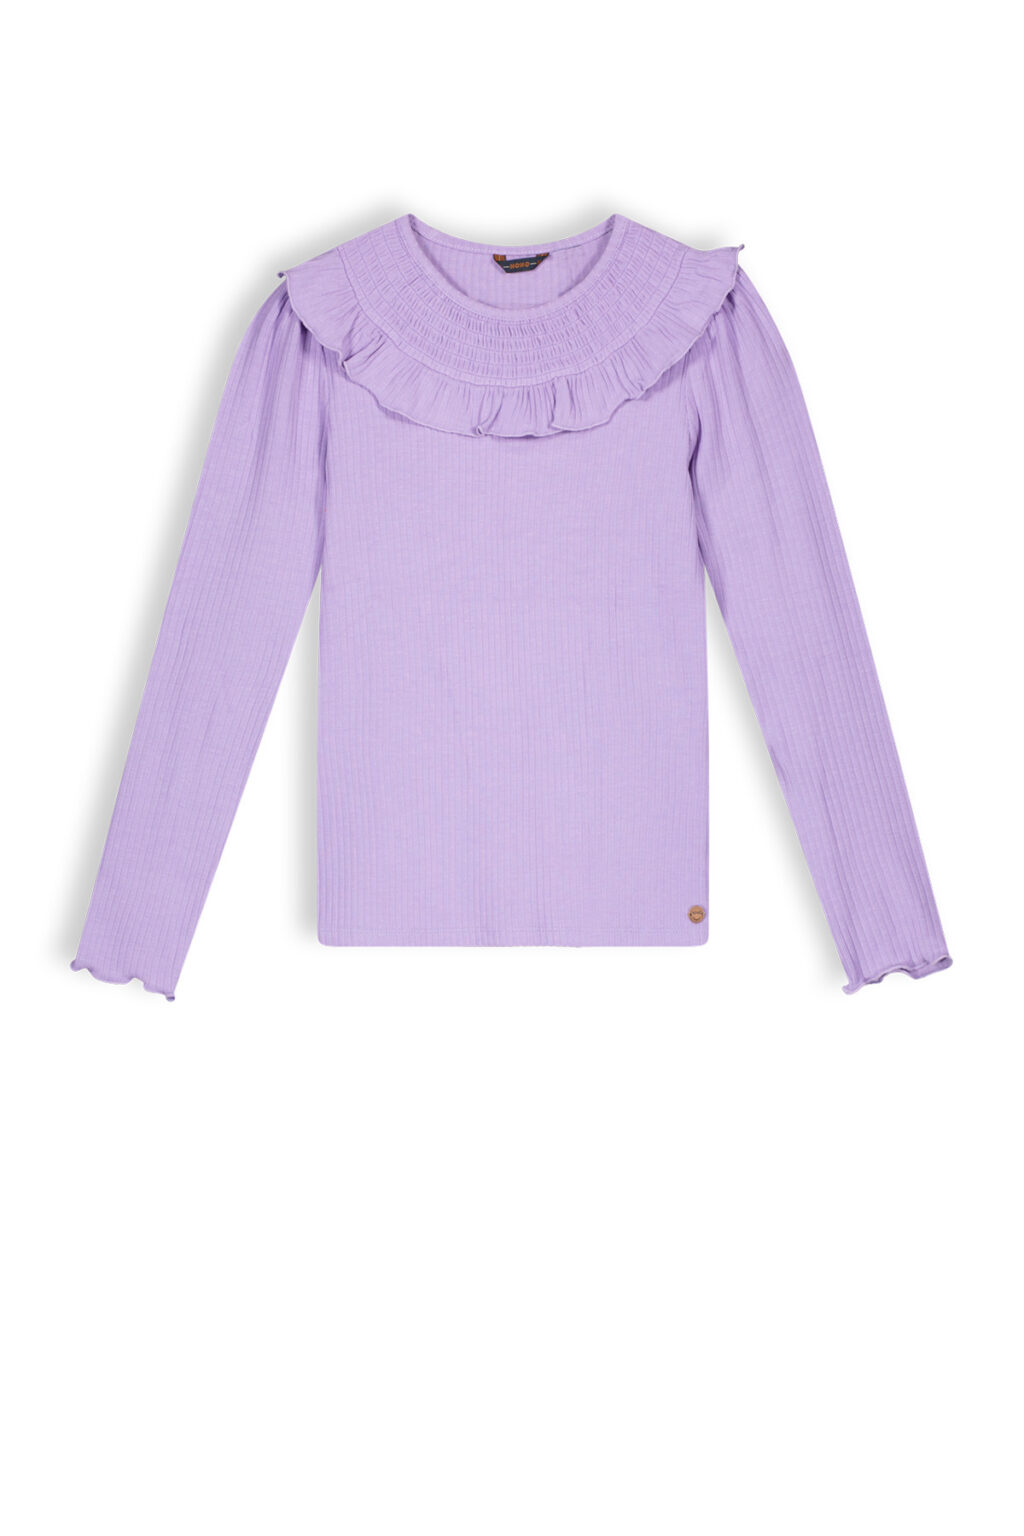 NoNo Meisjes shirt jersey rib - Kris - Galaxy lilac ~ Spinze.nl